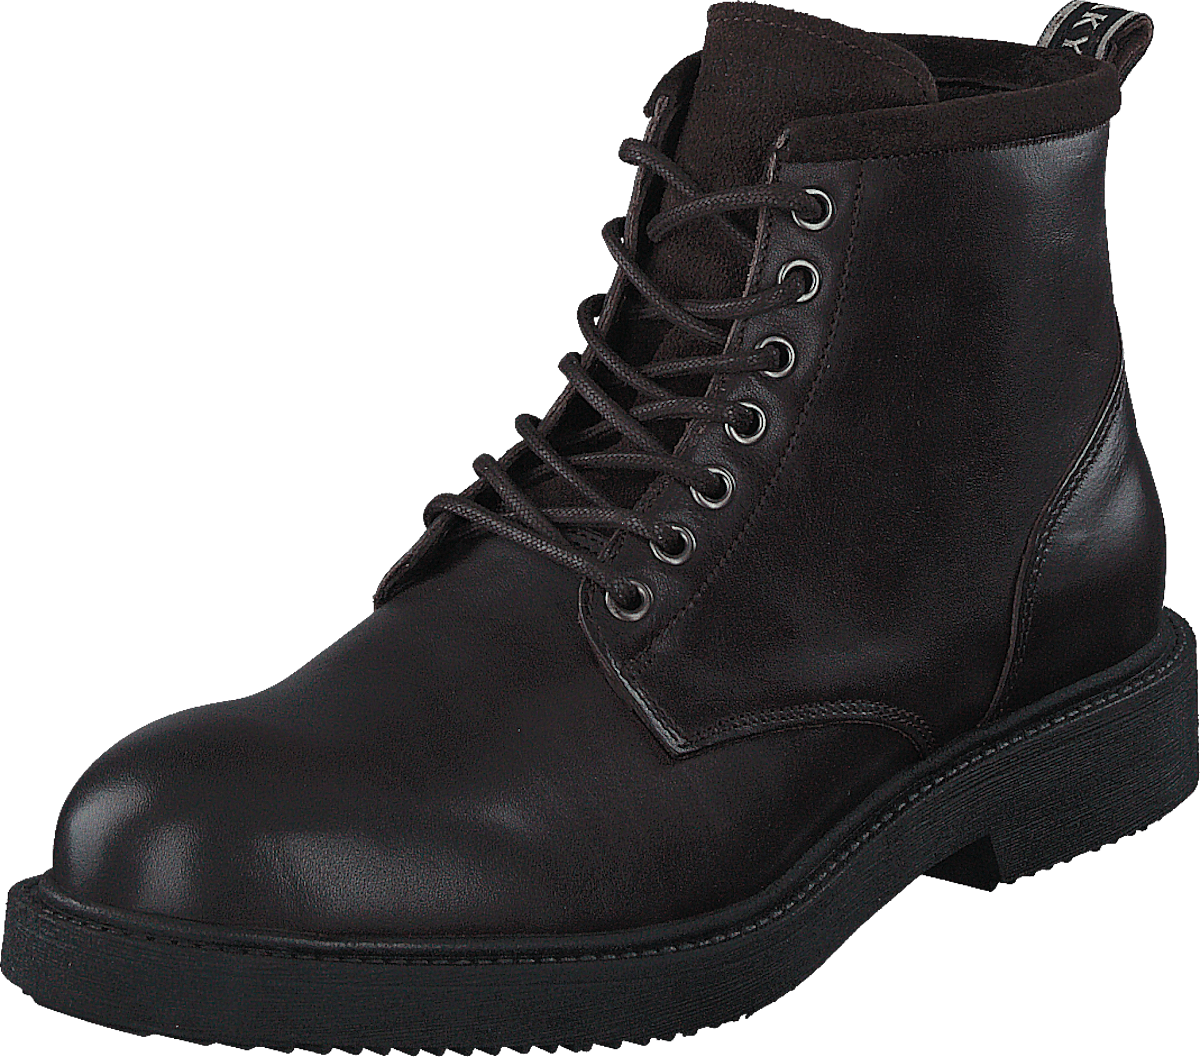 Texas Leather Shoe